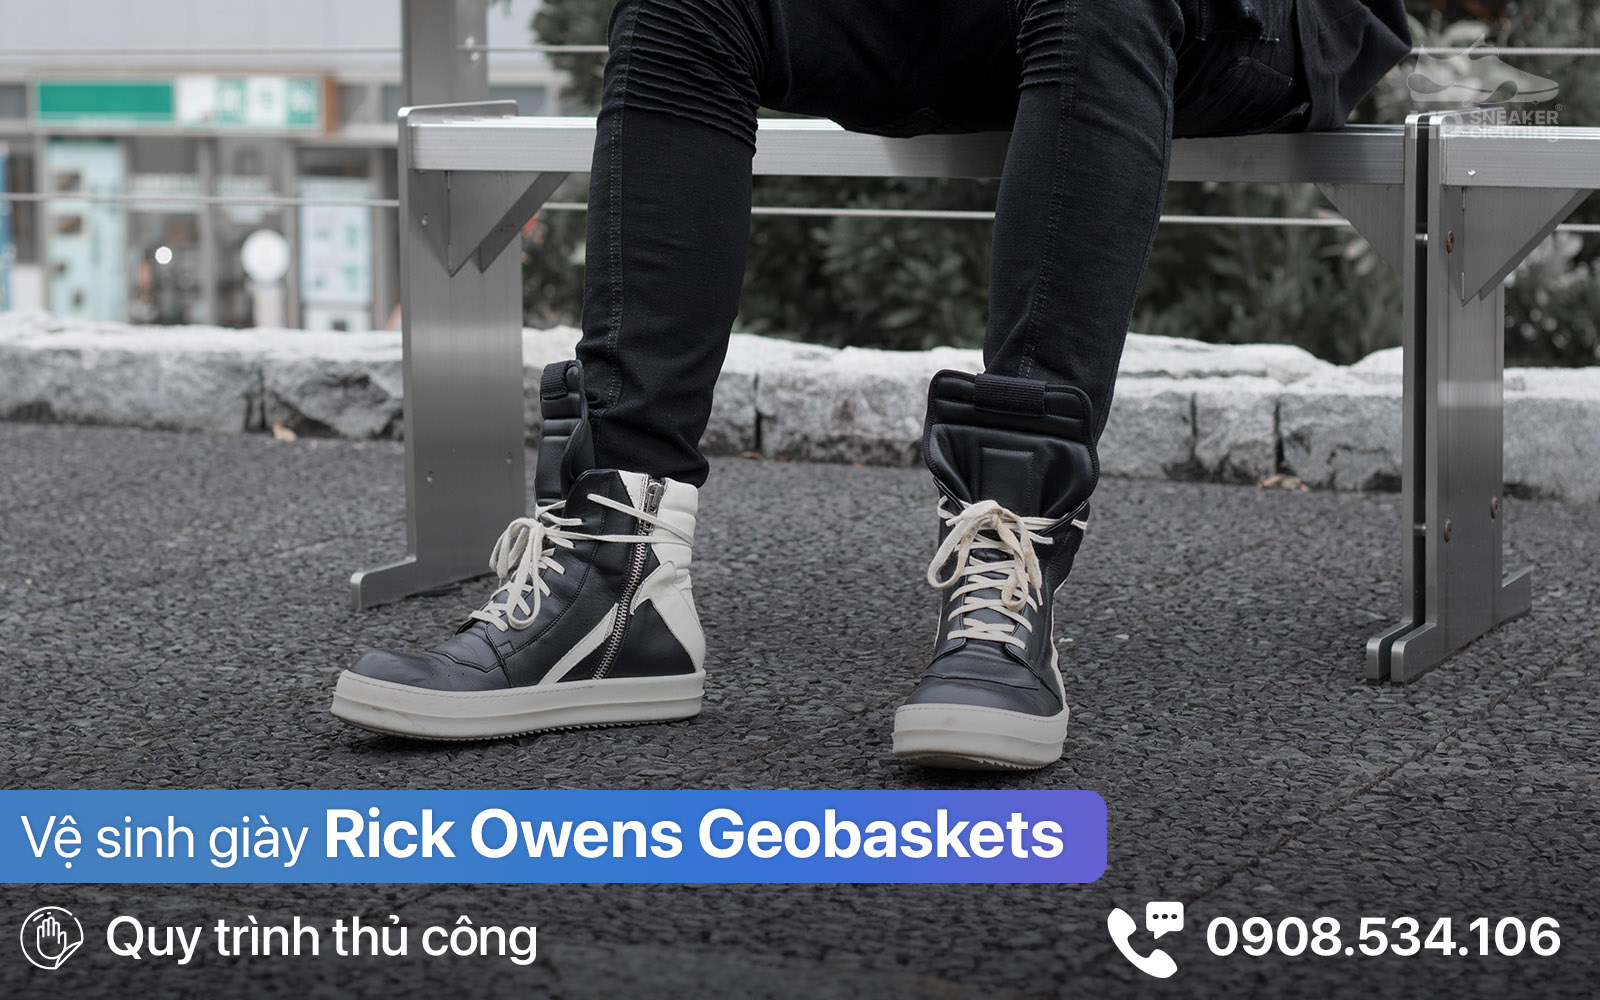 Vệ sinh giày Rick Owens Geobasket